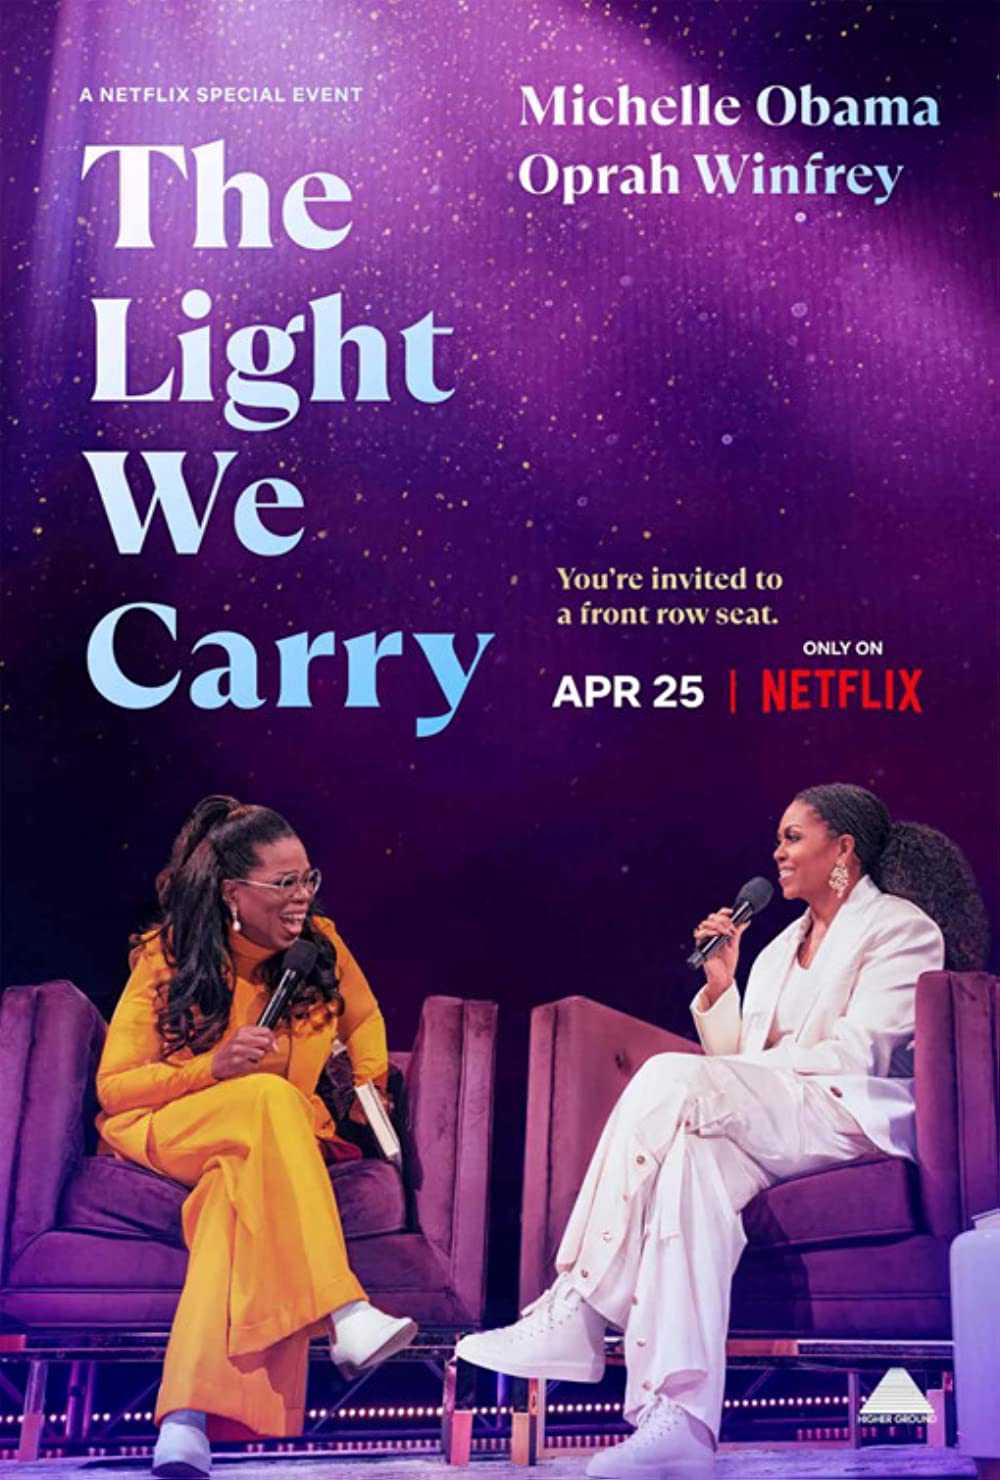 Ánh sáng ta mang: Michelle Obama và Oprah Winfrey - The Light We Carry: Michelle Obama and Oprah Winfrey